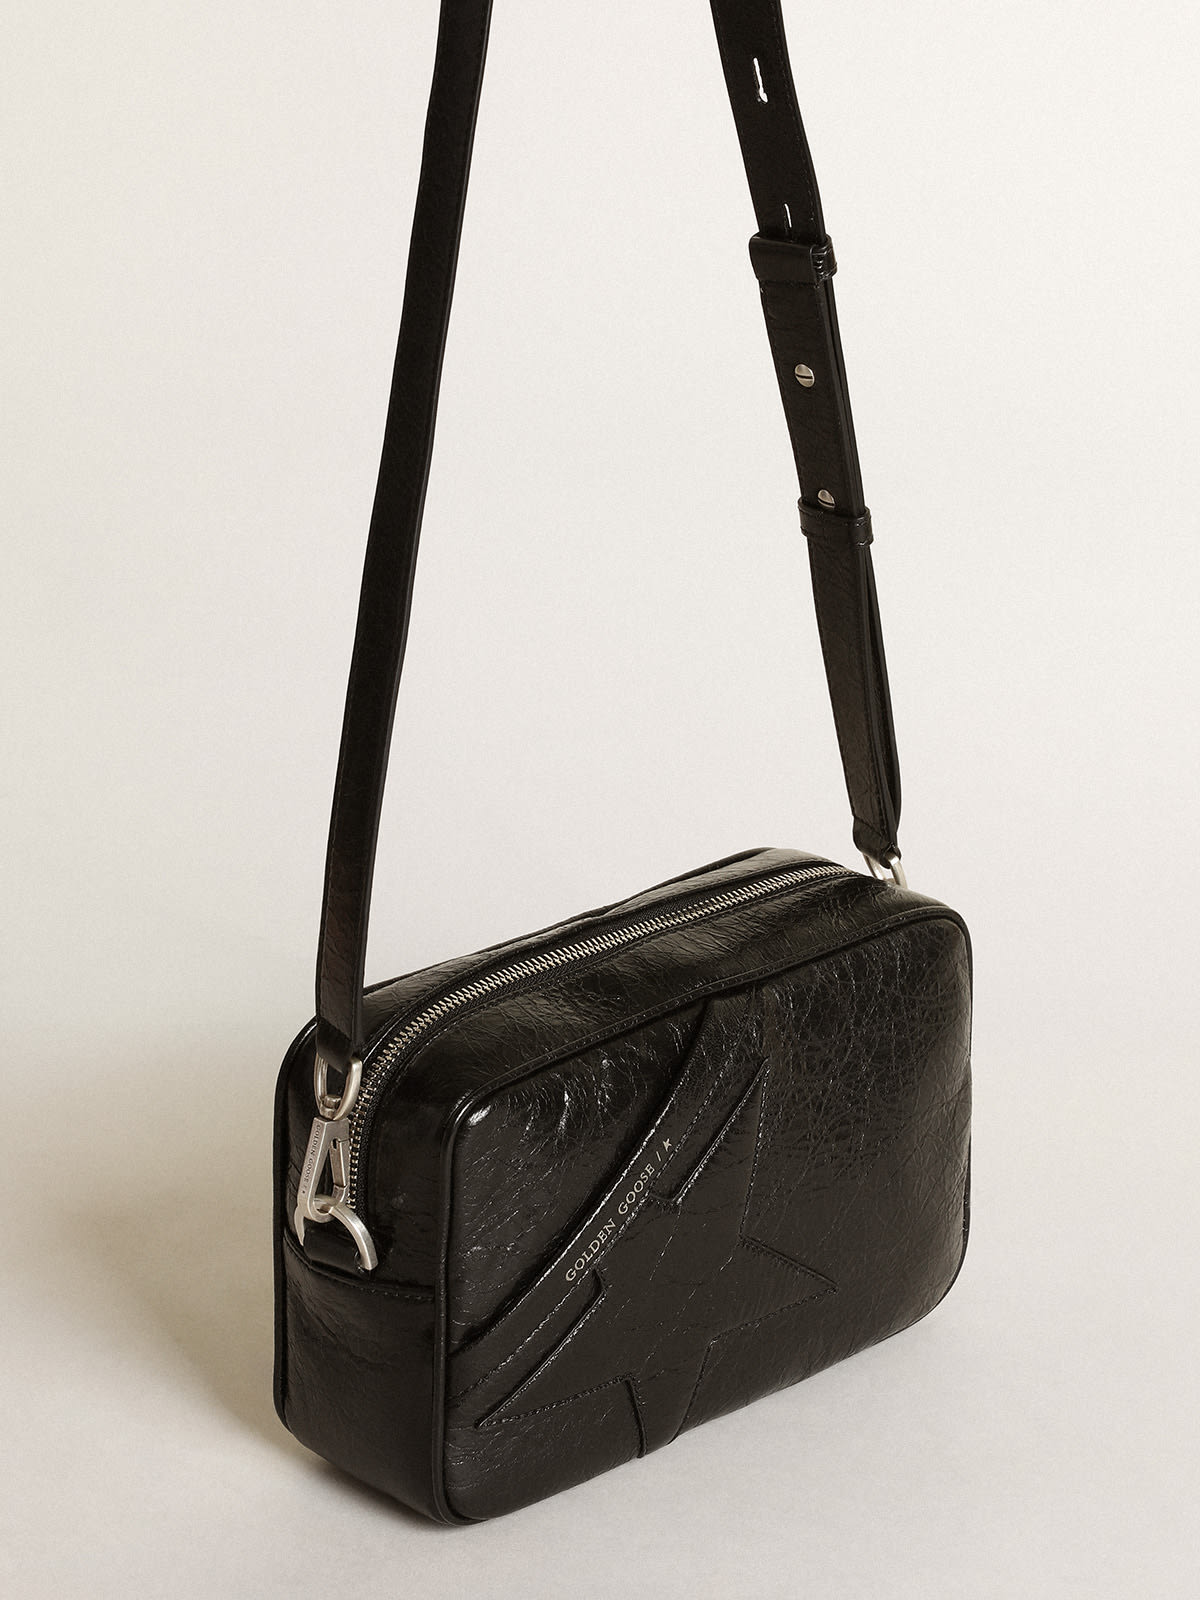 Golden Goose - Borsa Star Bag in pelle lucida color nero con stella ton sur ton in 